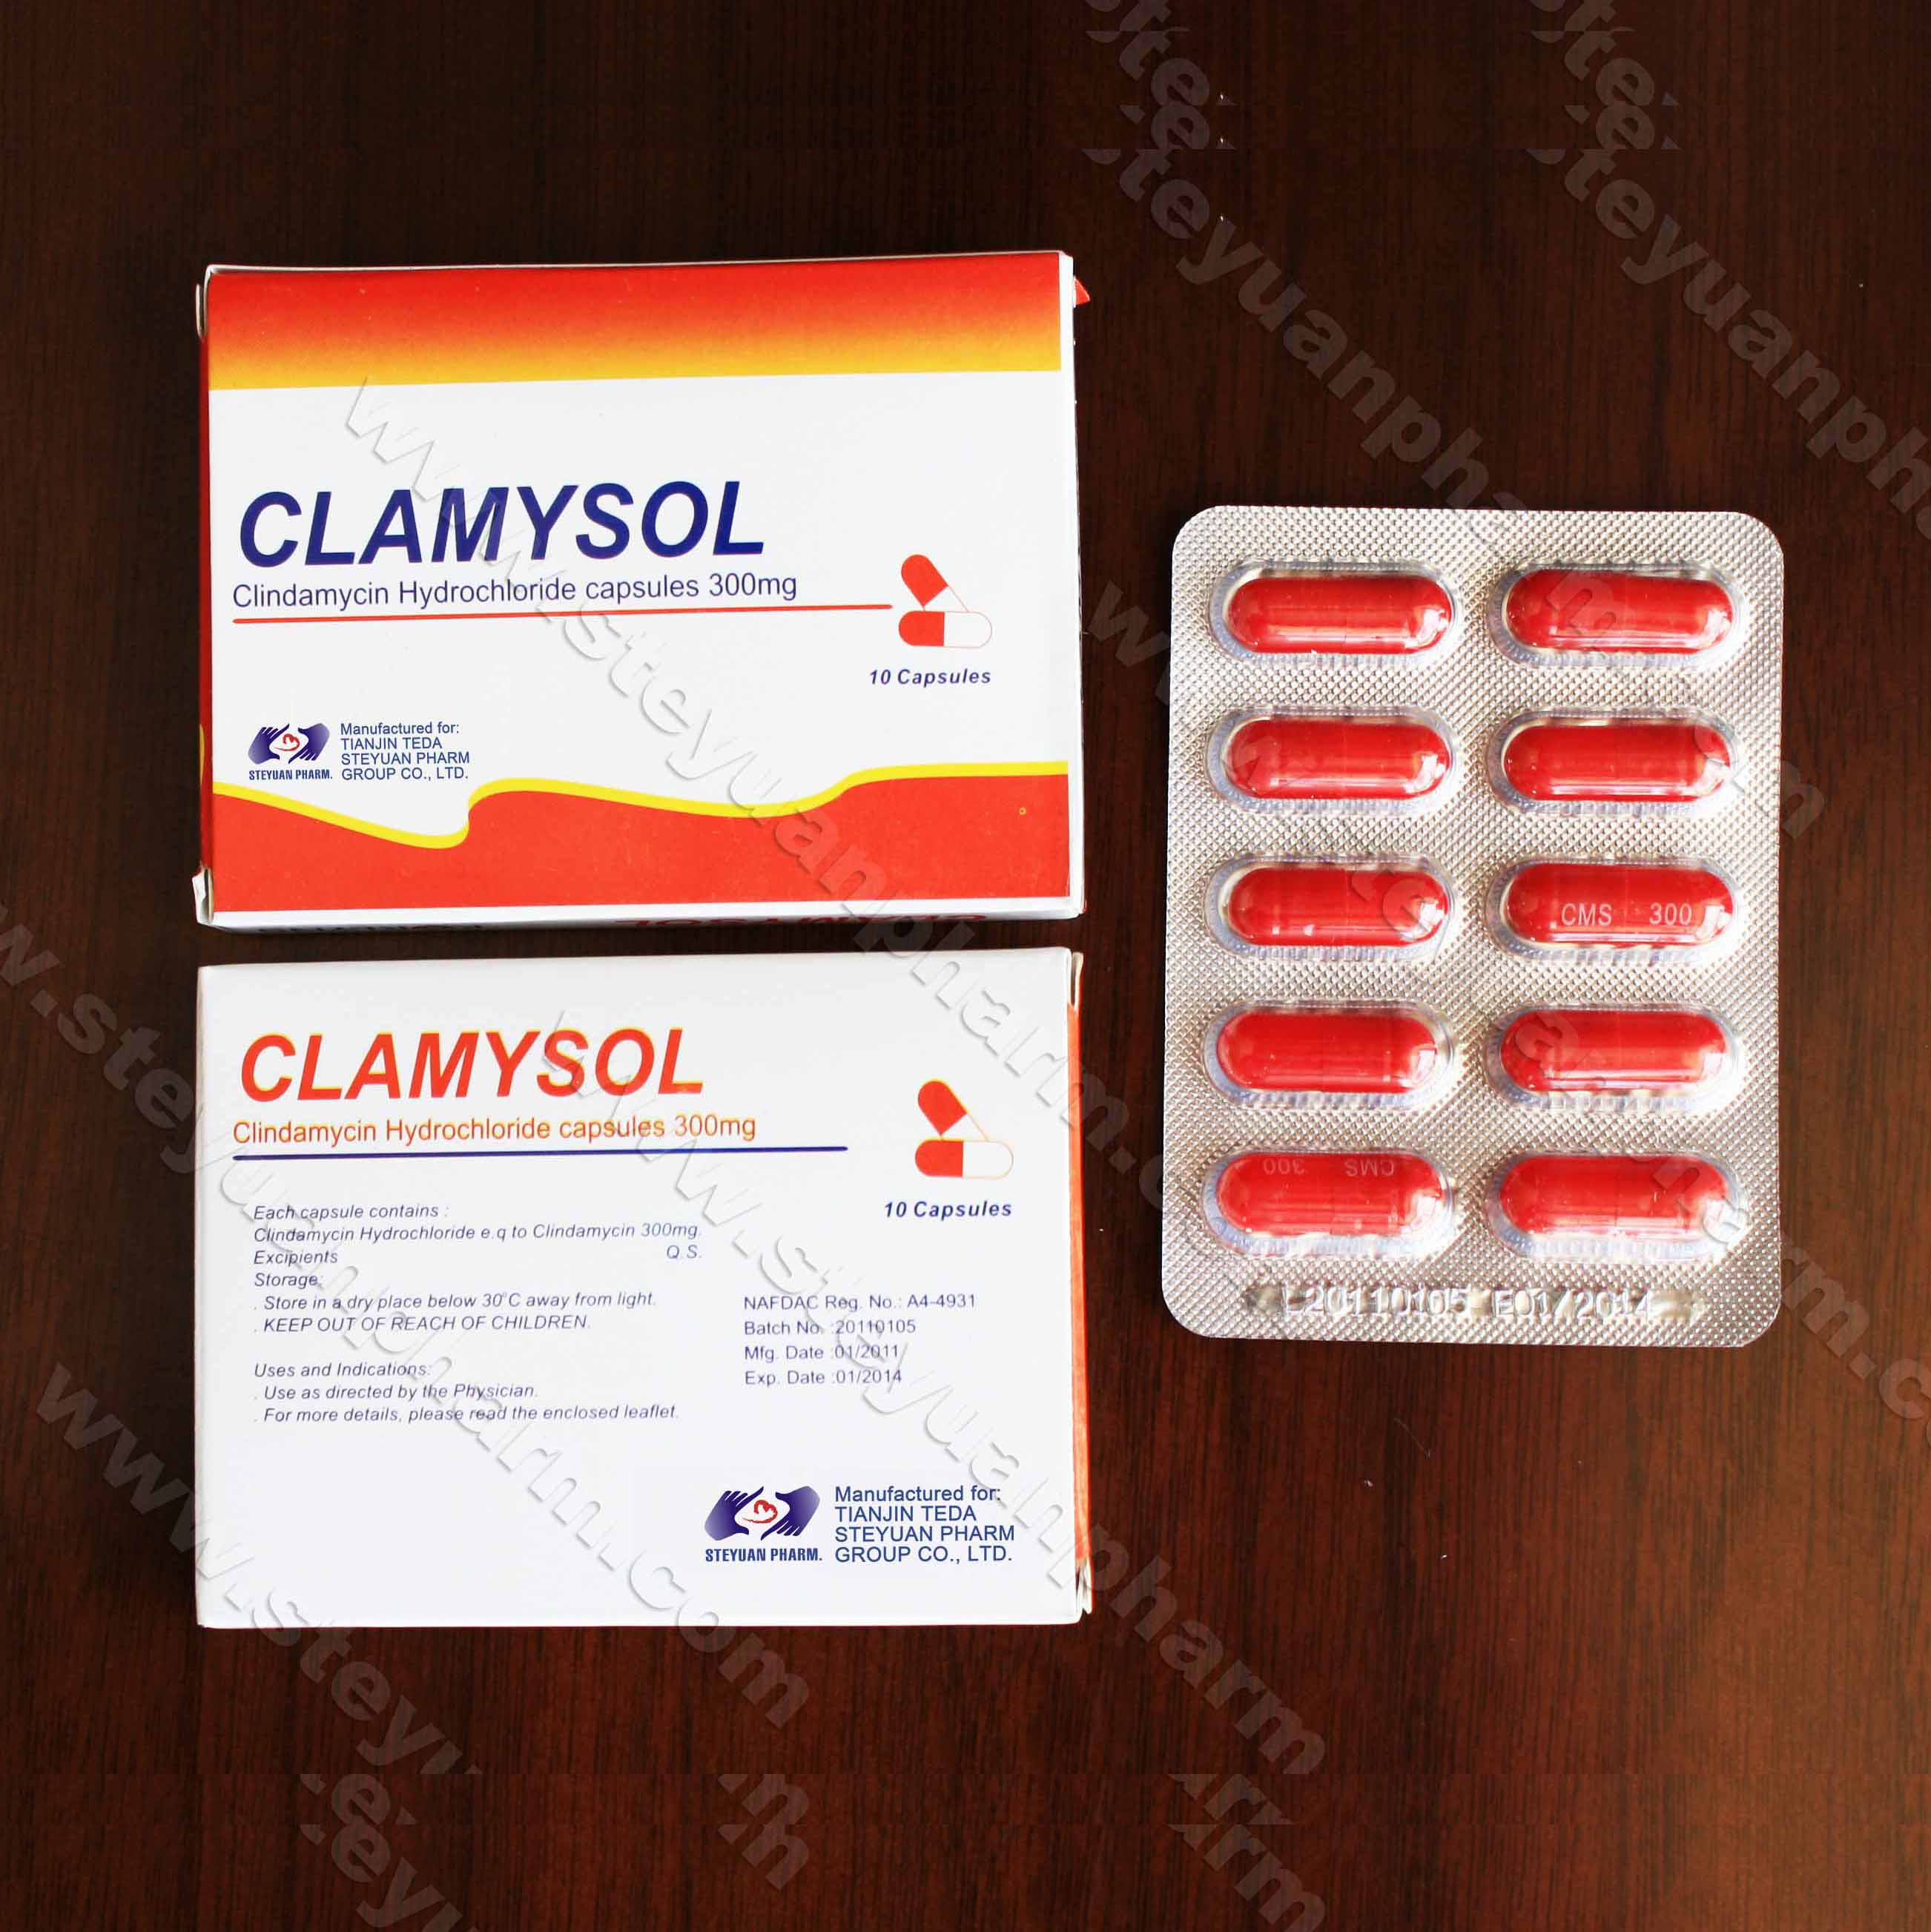 Clindamycin hydrochloride capsules